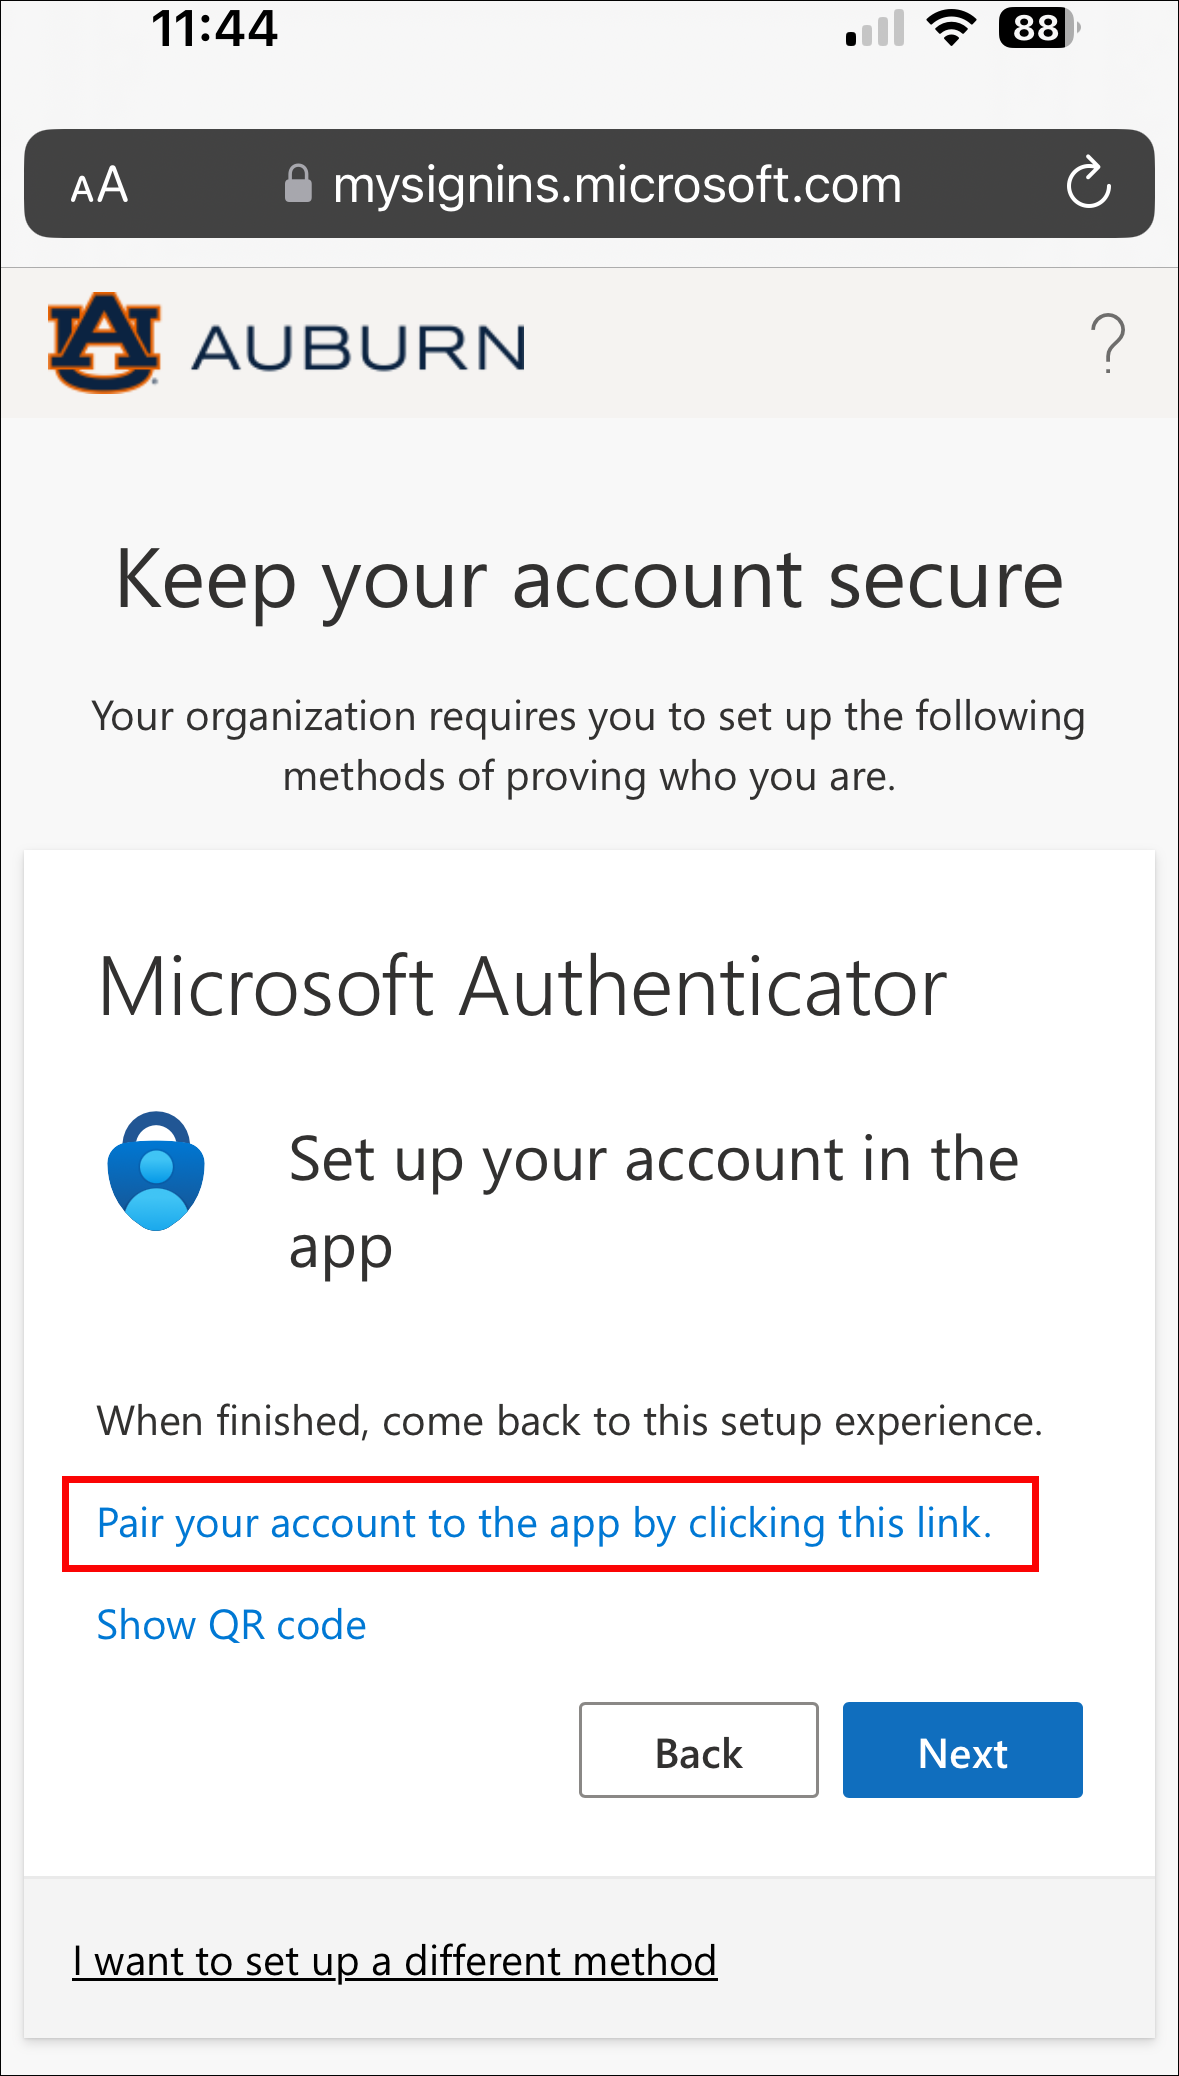 Microsoft authenticator app pair your account screen